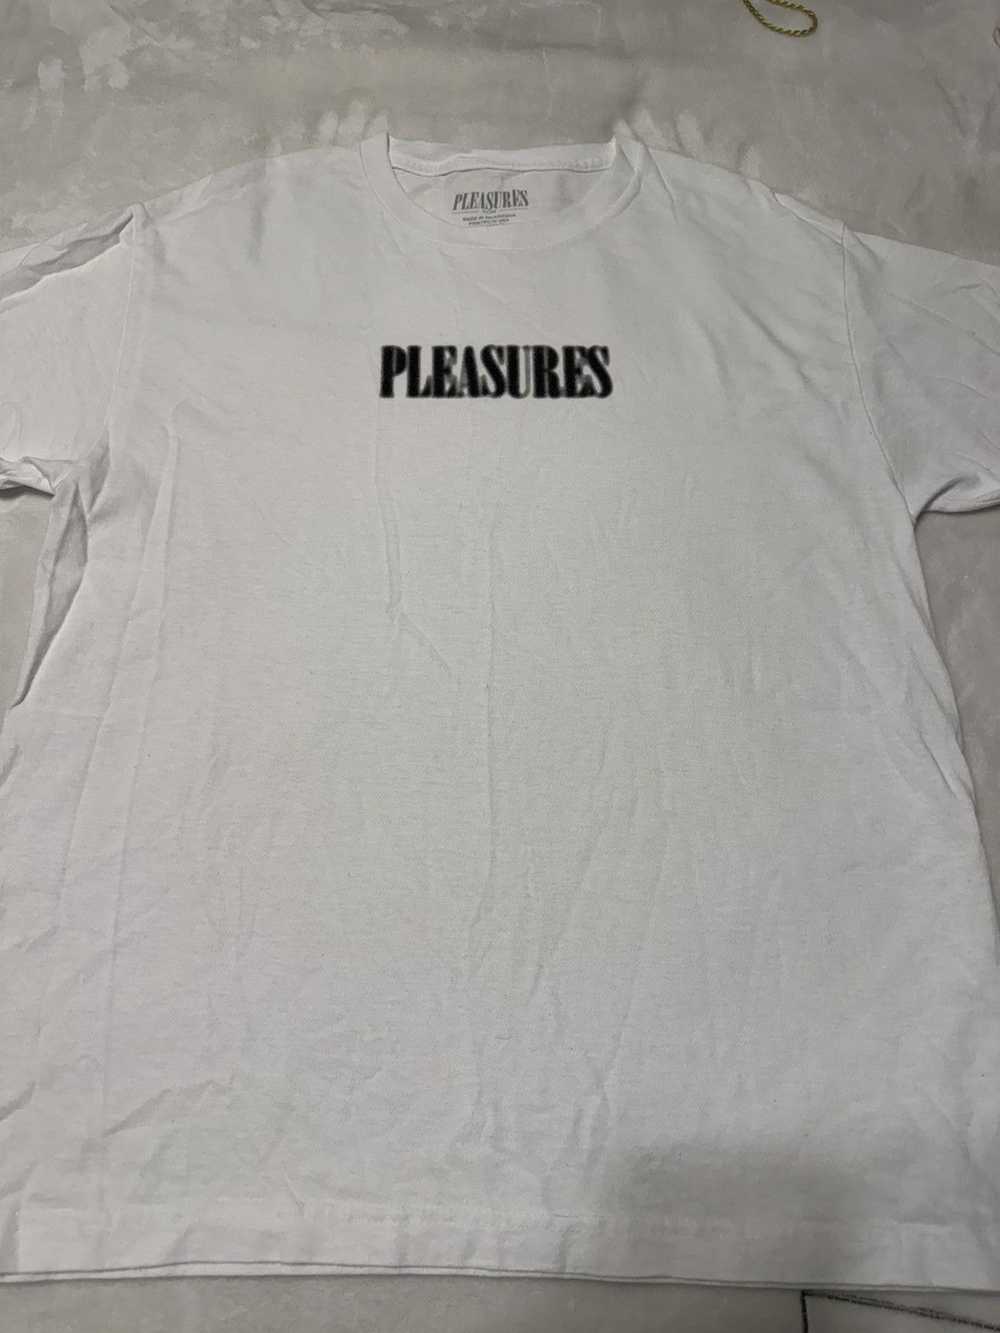 Pleasures Pleasures Tee - image 1